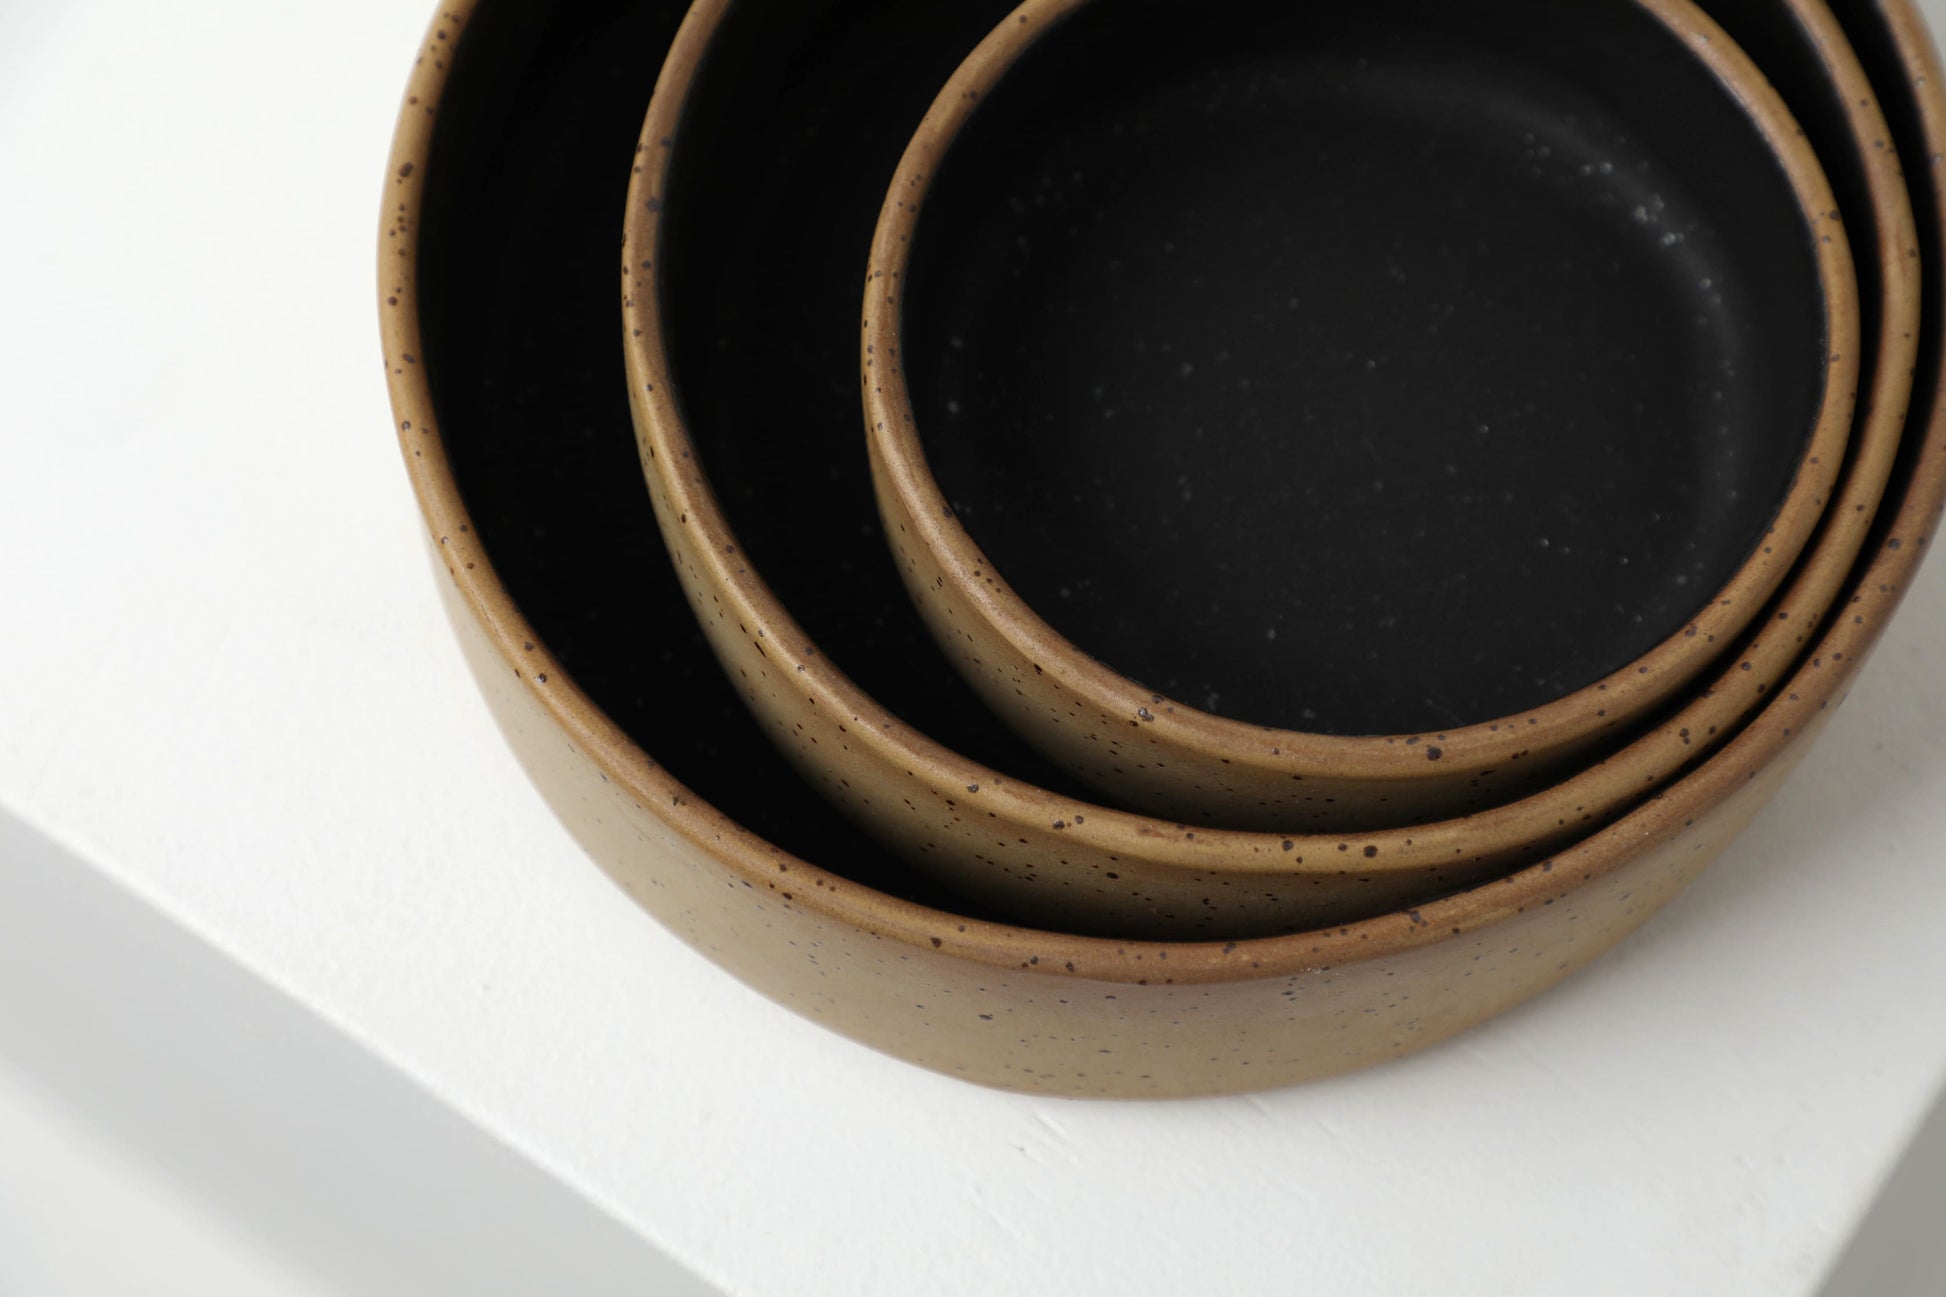 Handmade ceramic dog bowls | RAW+BLACK - premium dog goods handmade in Europe by My Wild Other